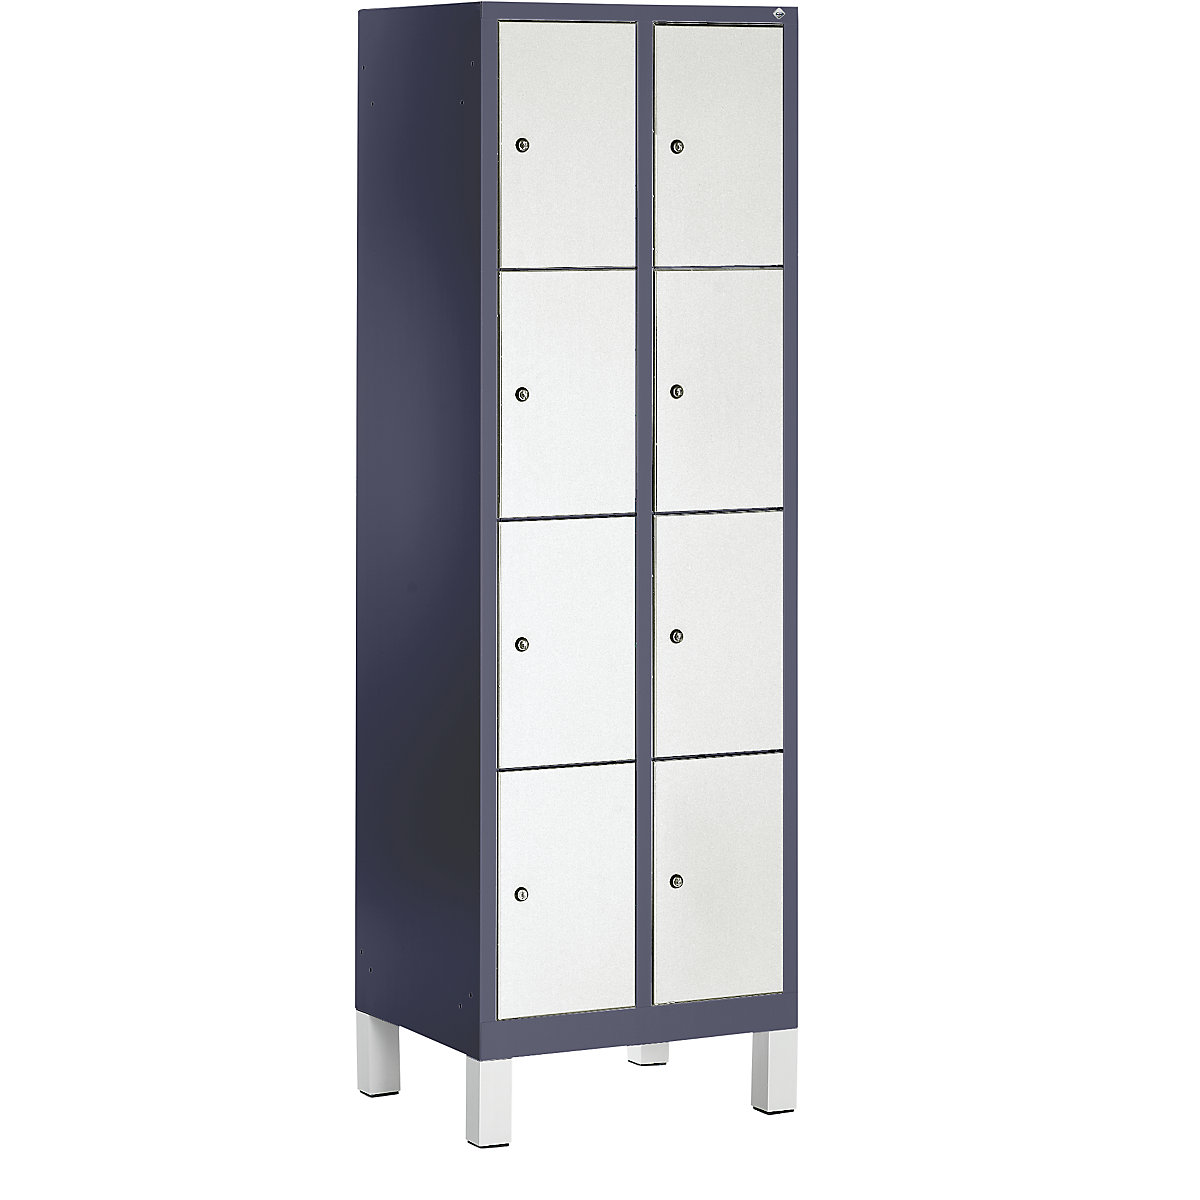 EVOLO cloakroom locker – C+P, with plastic feet, 8 compartments, compartment width 300 mm, black grey / white aluminium-8